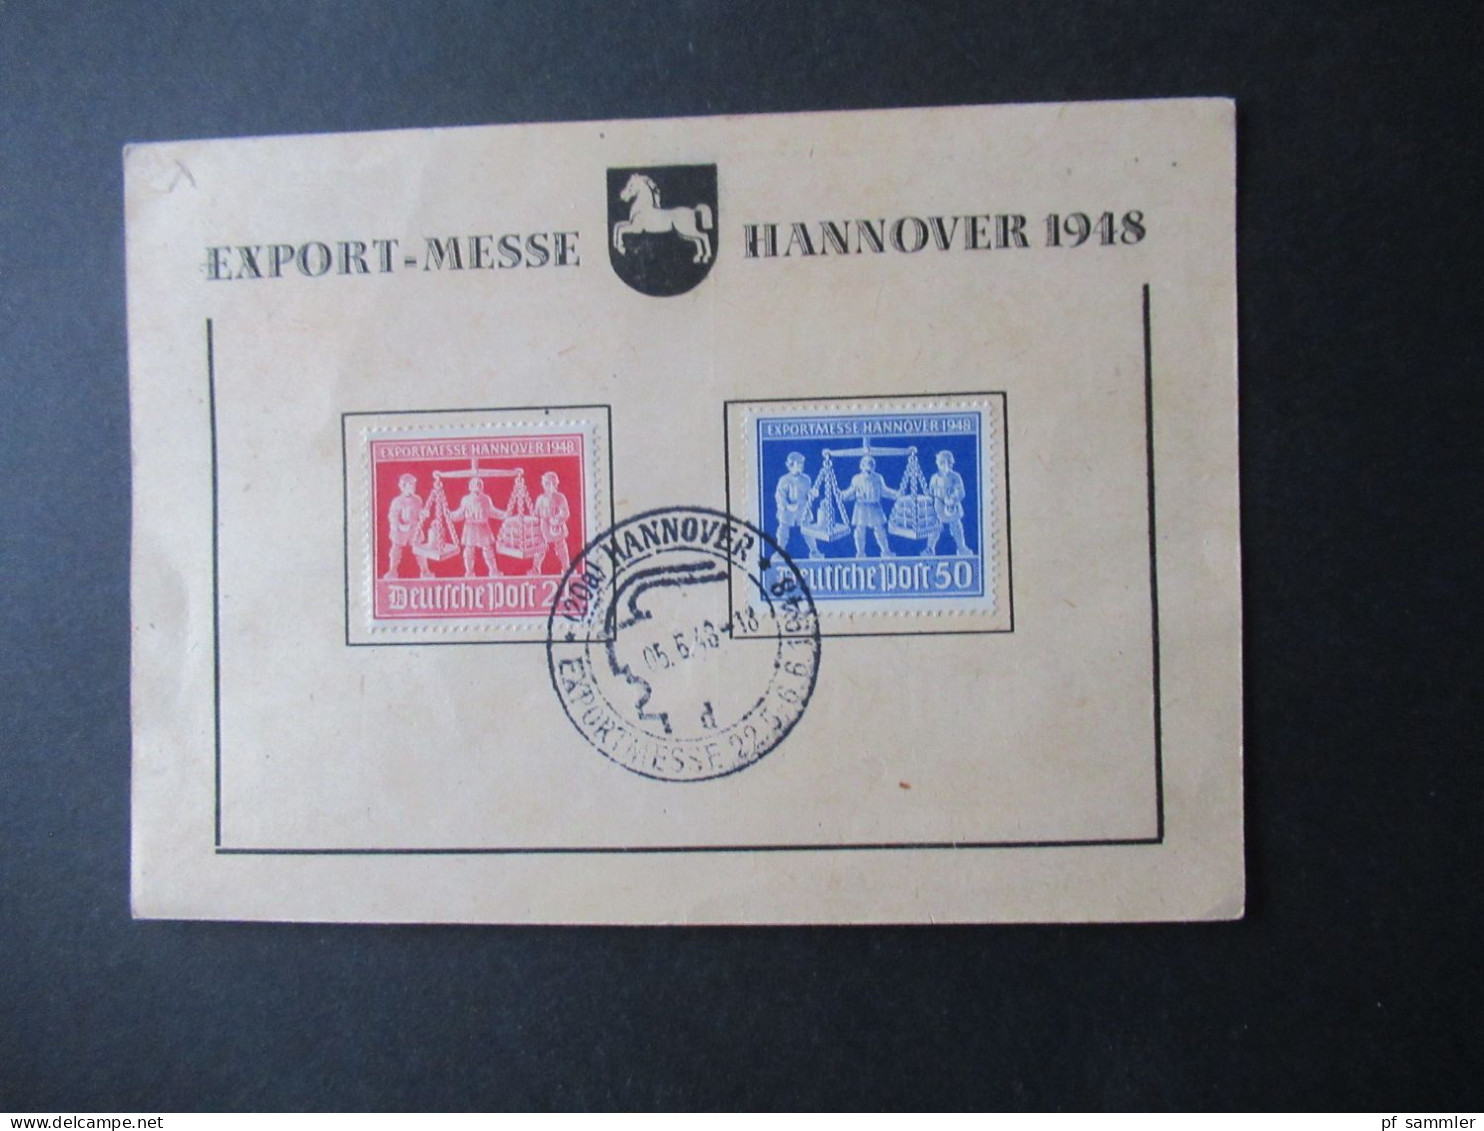 Kontrollrat 1948 Sonder PK Export Messe Hannover Nr.969 / 970 Sonderstempel Hannover D Exportmesse Offizielle PK - Covers & Documents